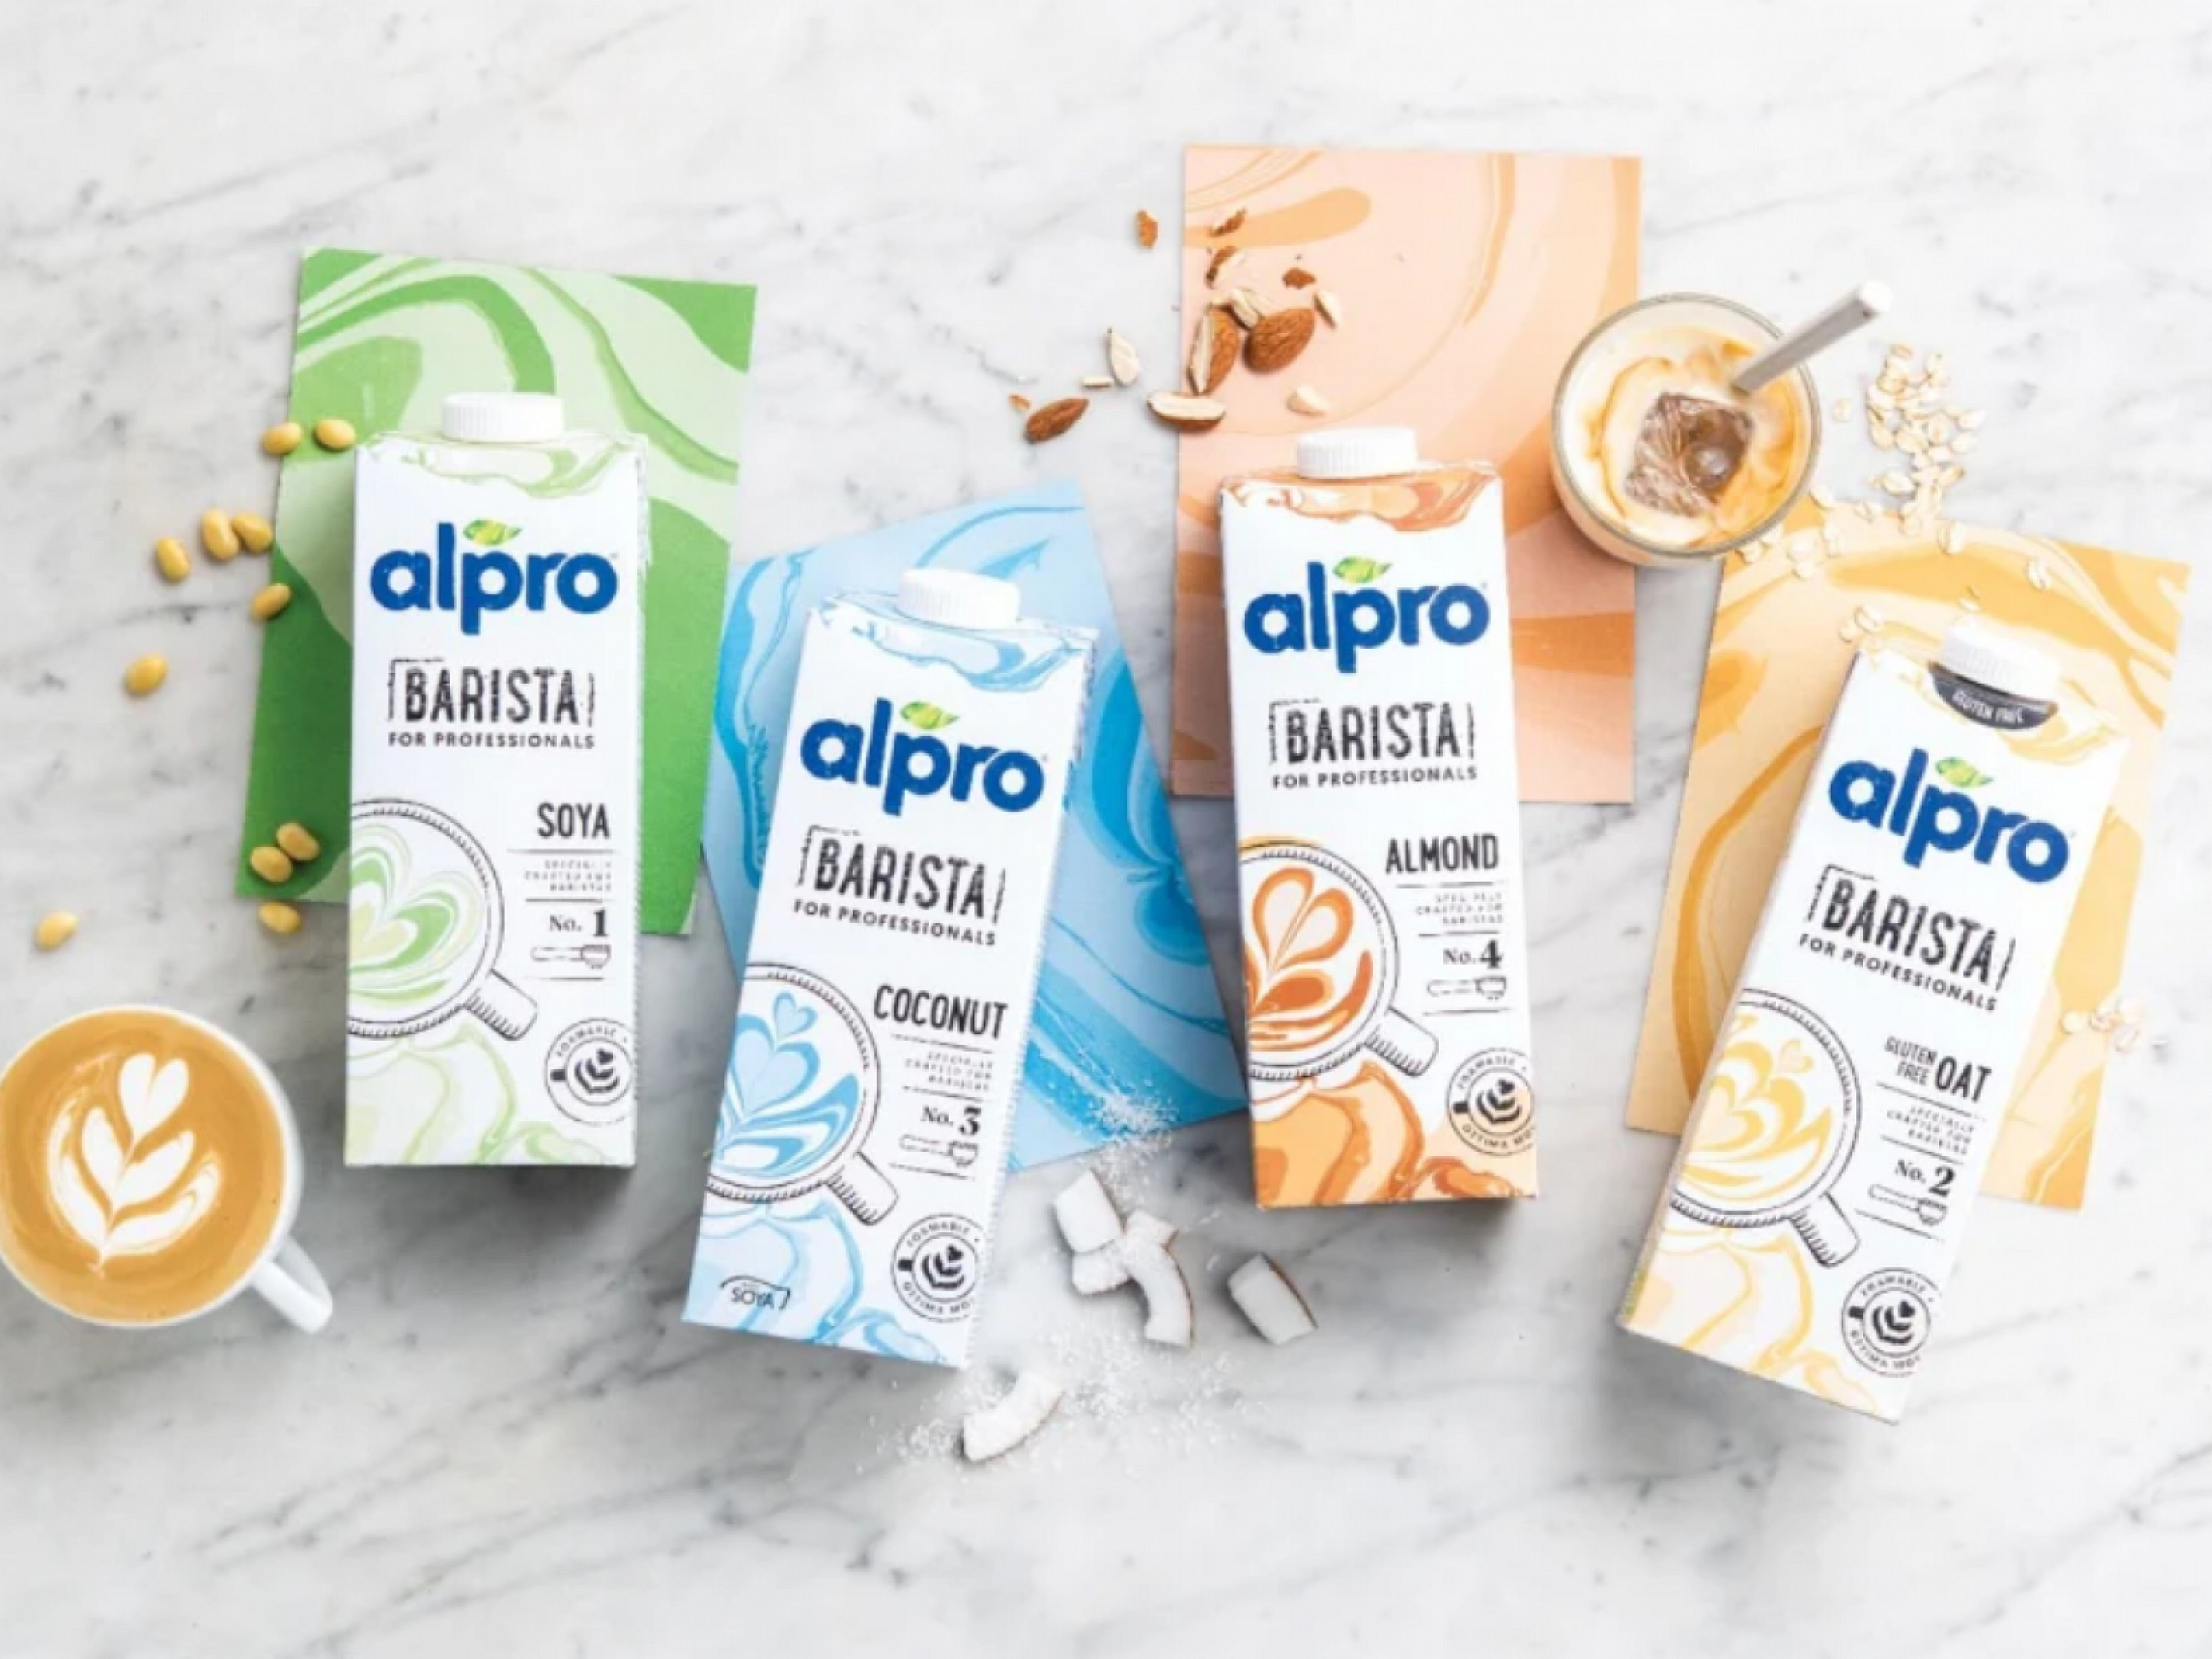 Alpro barista milk for professionals – soya, coconut, almond, oat